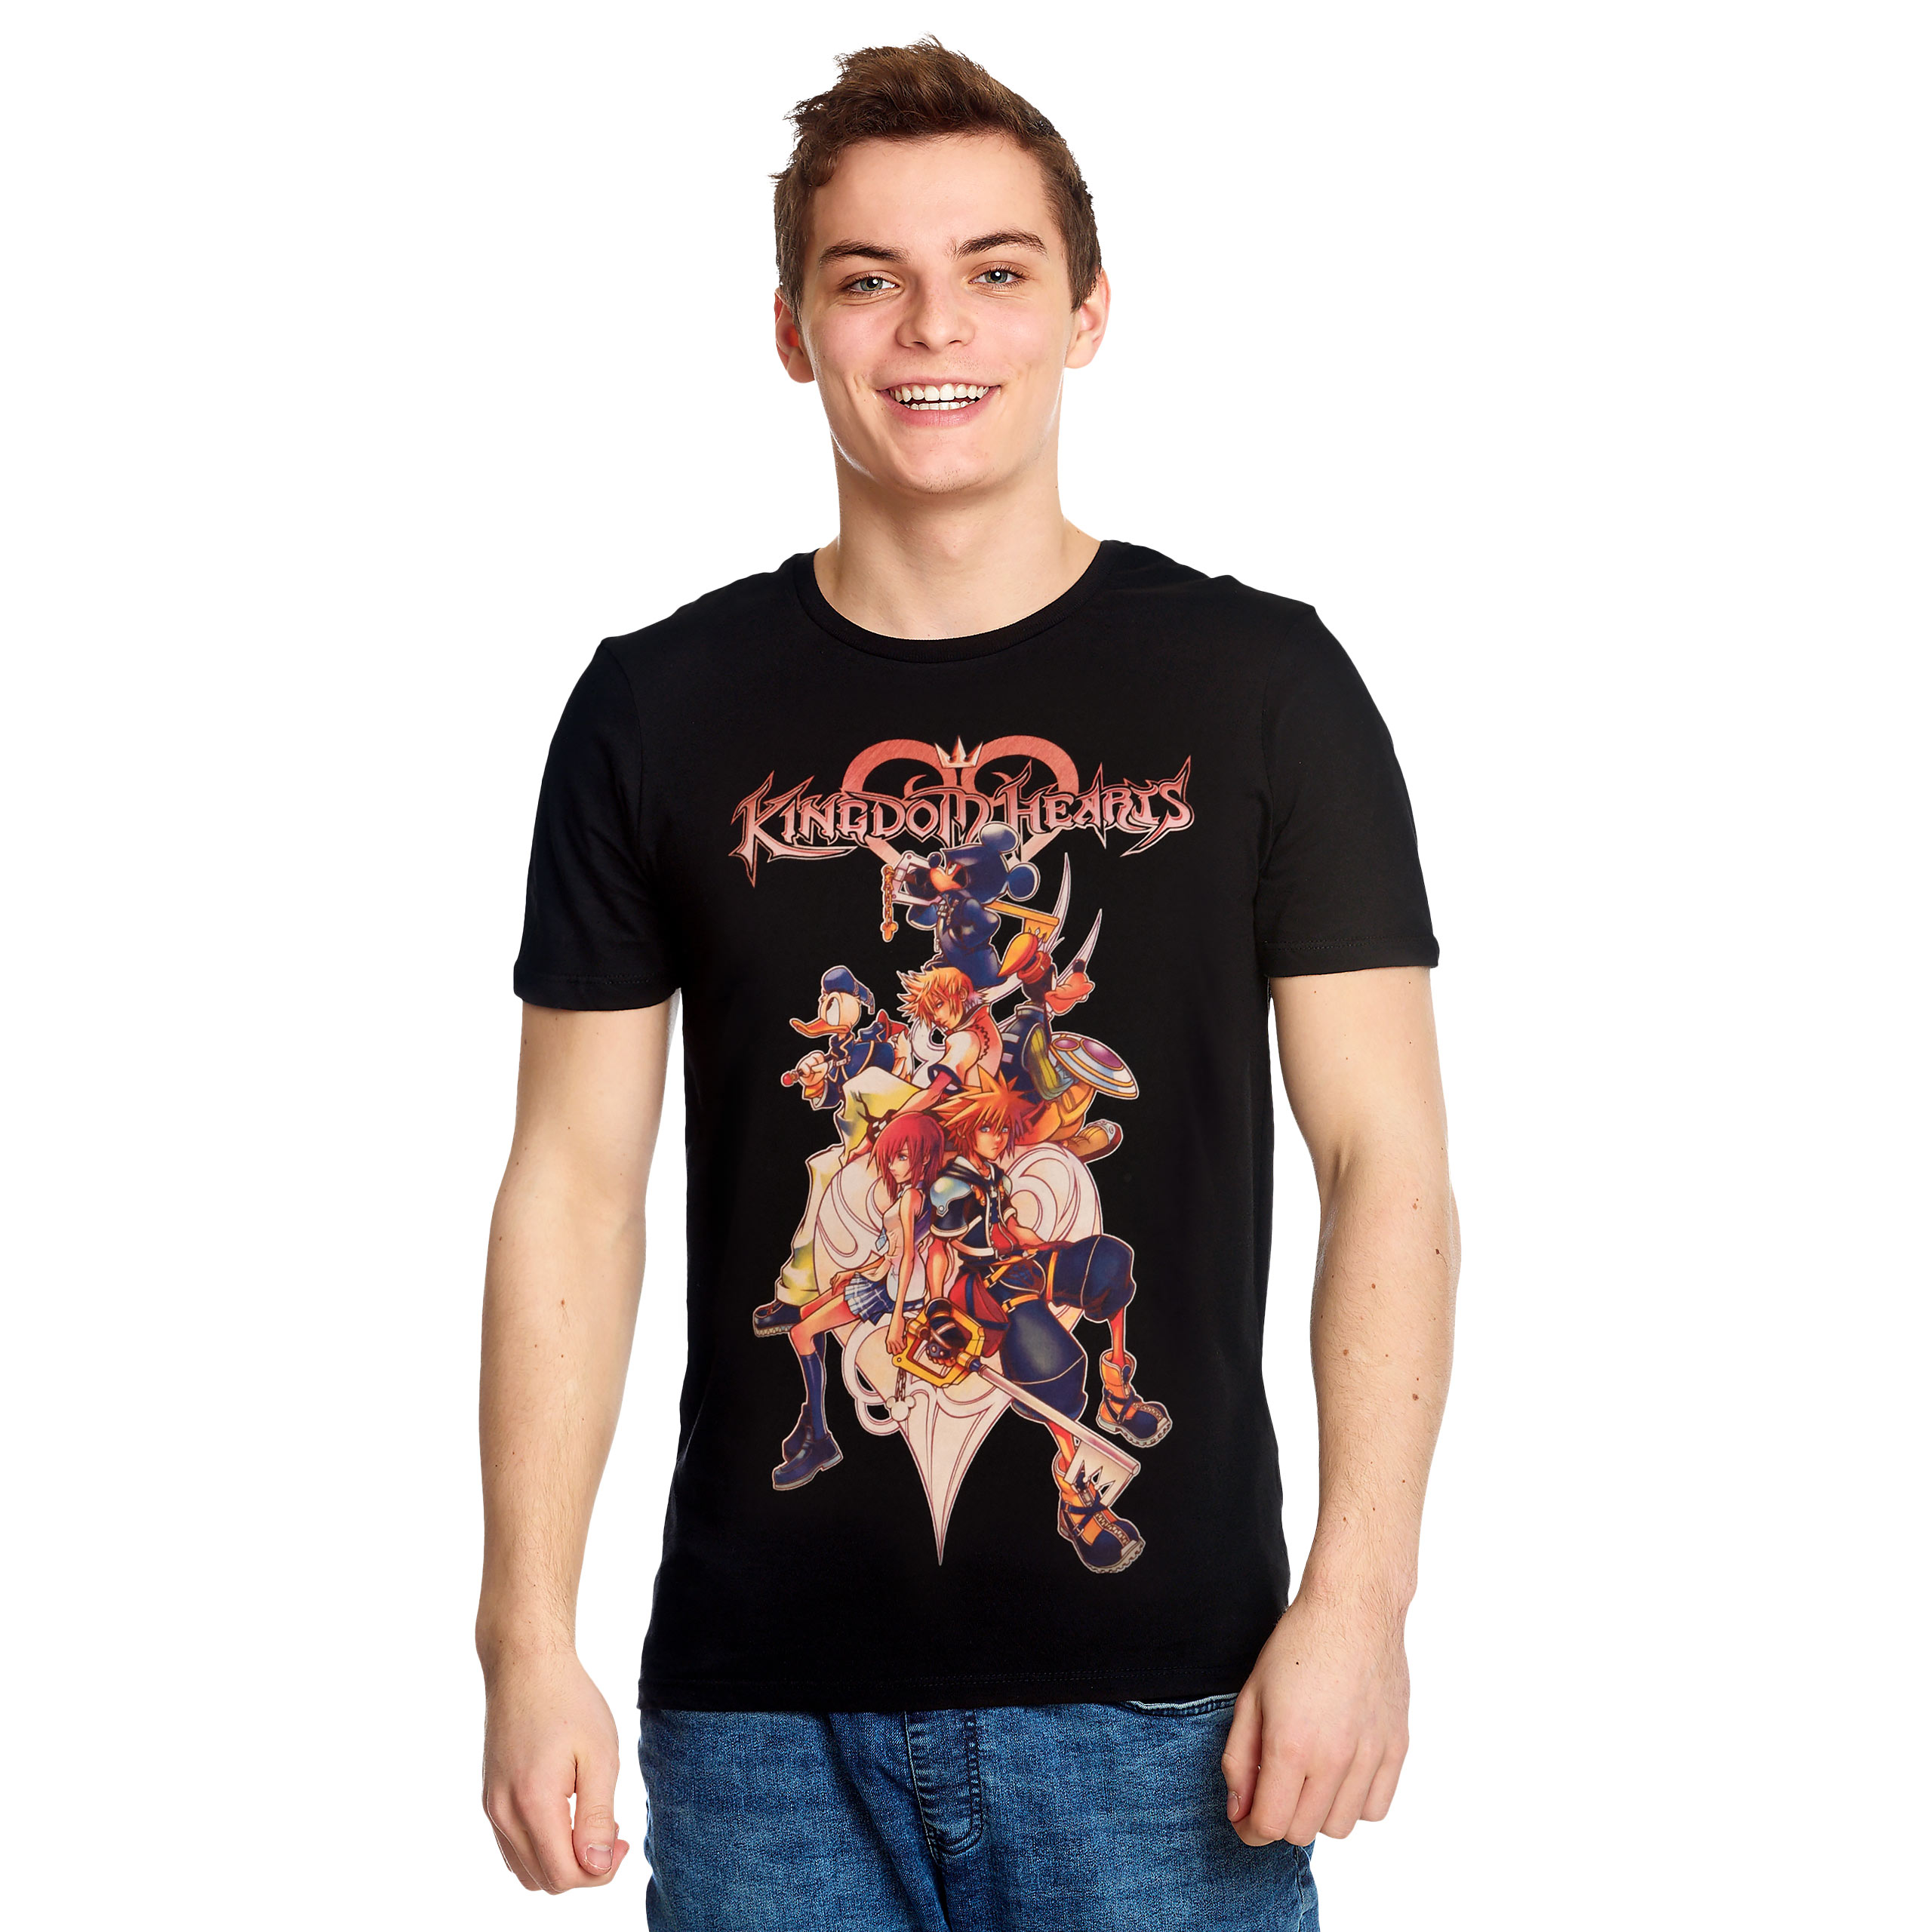 Kingdom Hearts - T-shirt familial noir